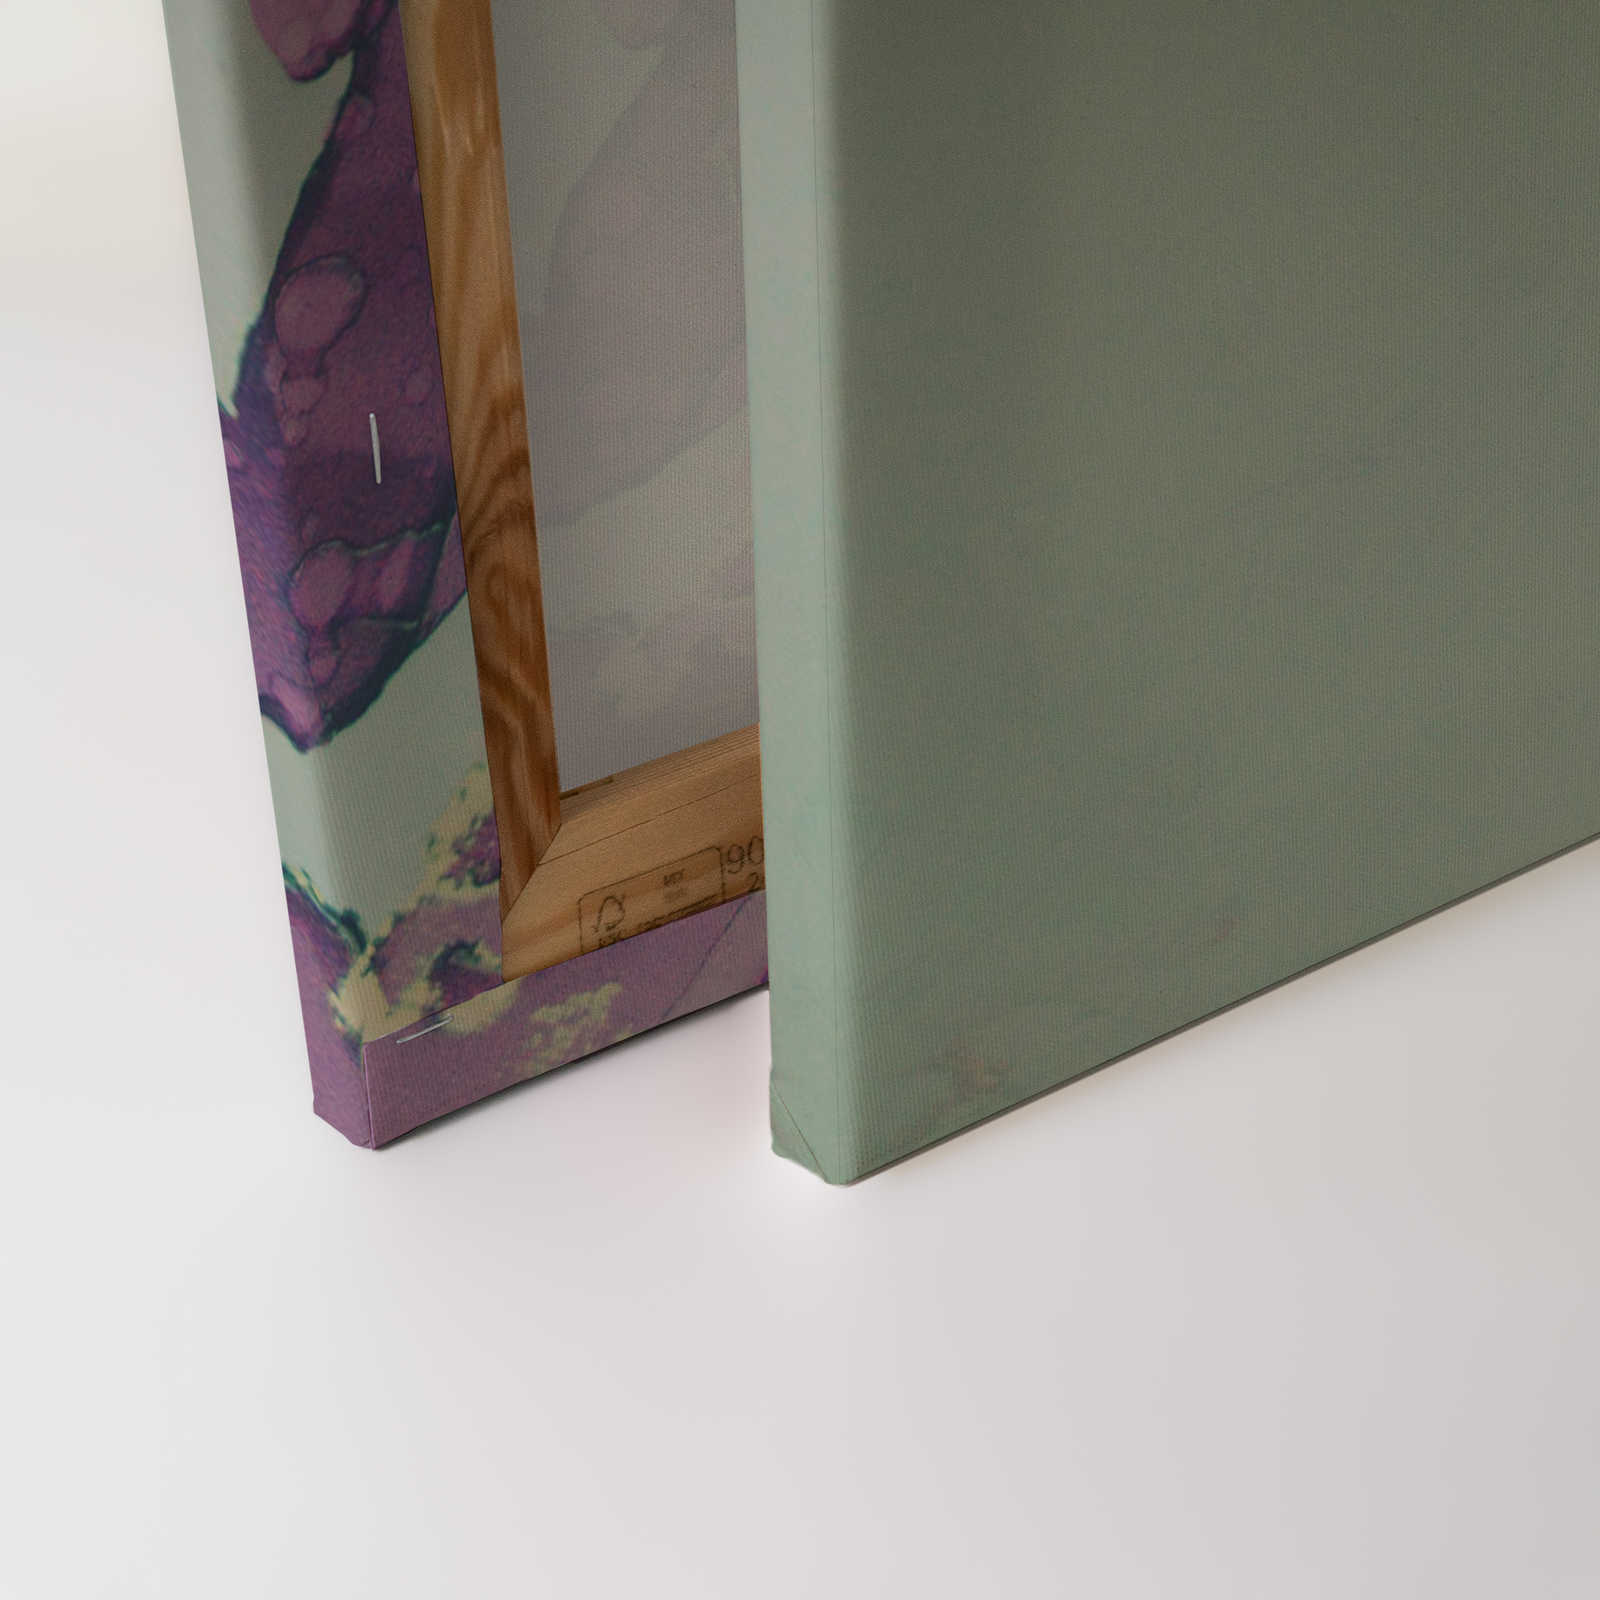             Acryl Design Leinwandbild Frauengesicht in Türkis & Violett – 1,20 m x 0,80 m
        